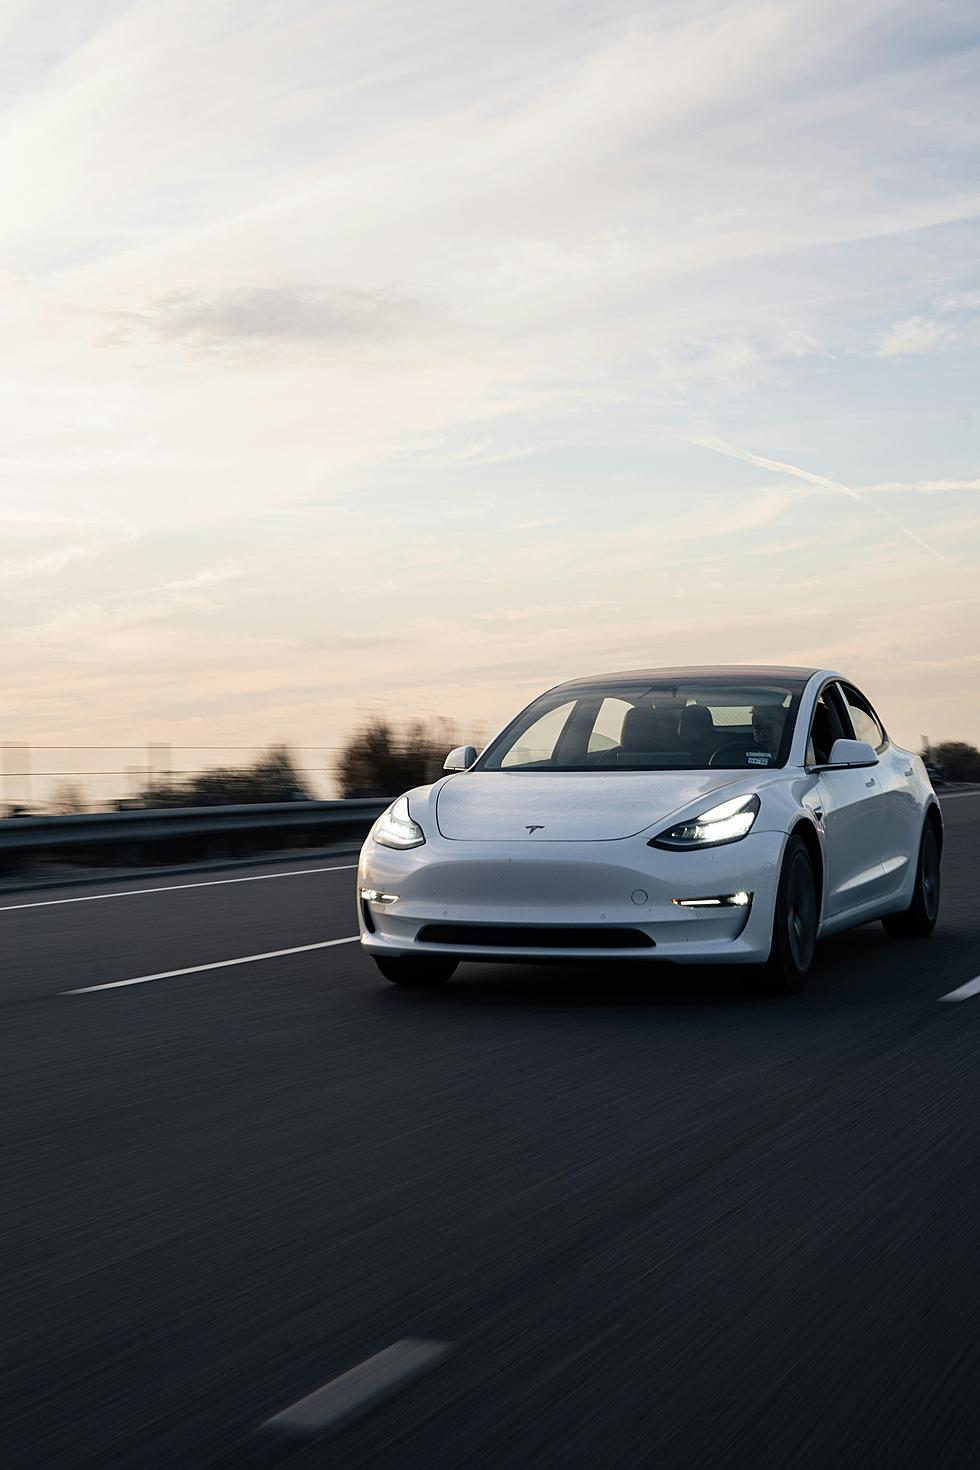 Over 2 Million Cars Now Under Recall, Tesla Responds